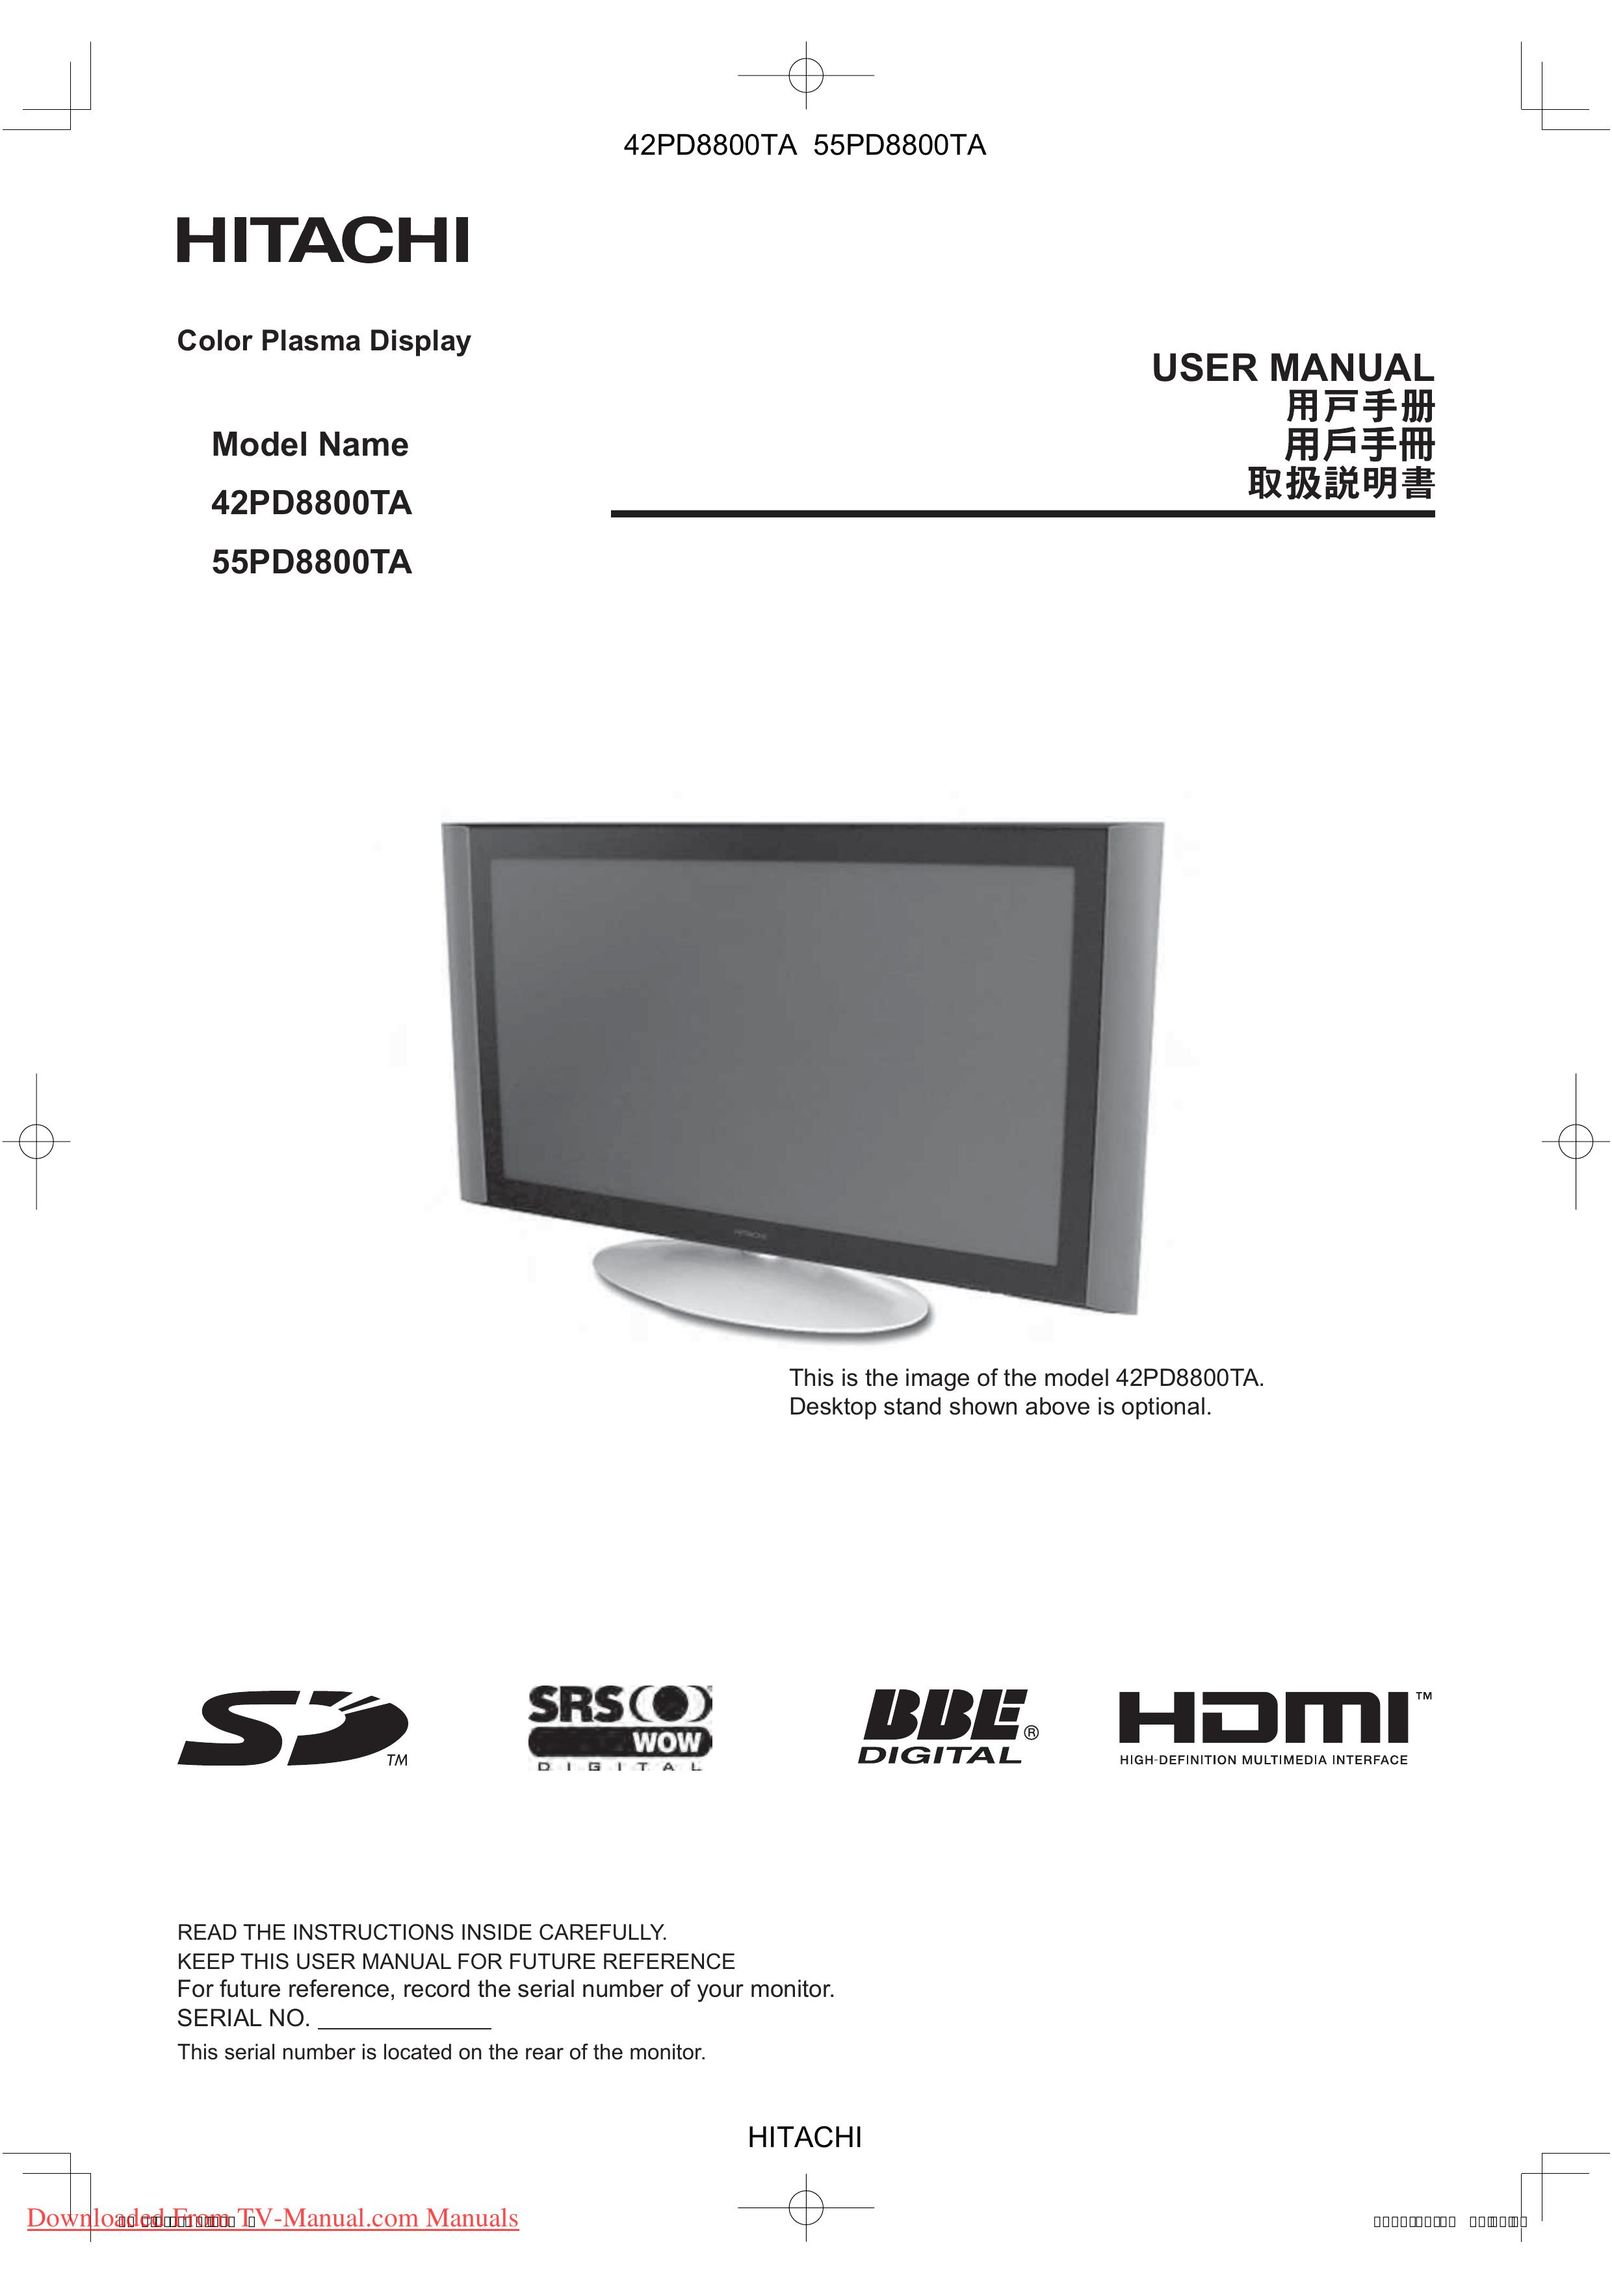 Hitachi 42PD8800TA TV Antenna User Manual